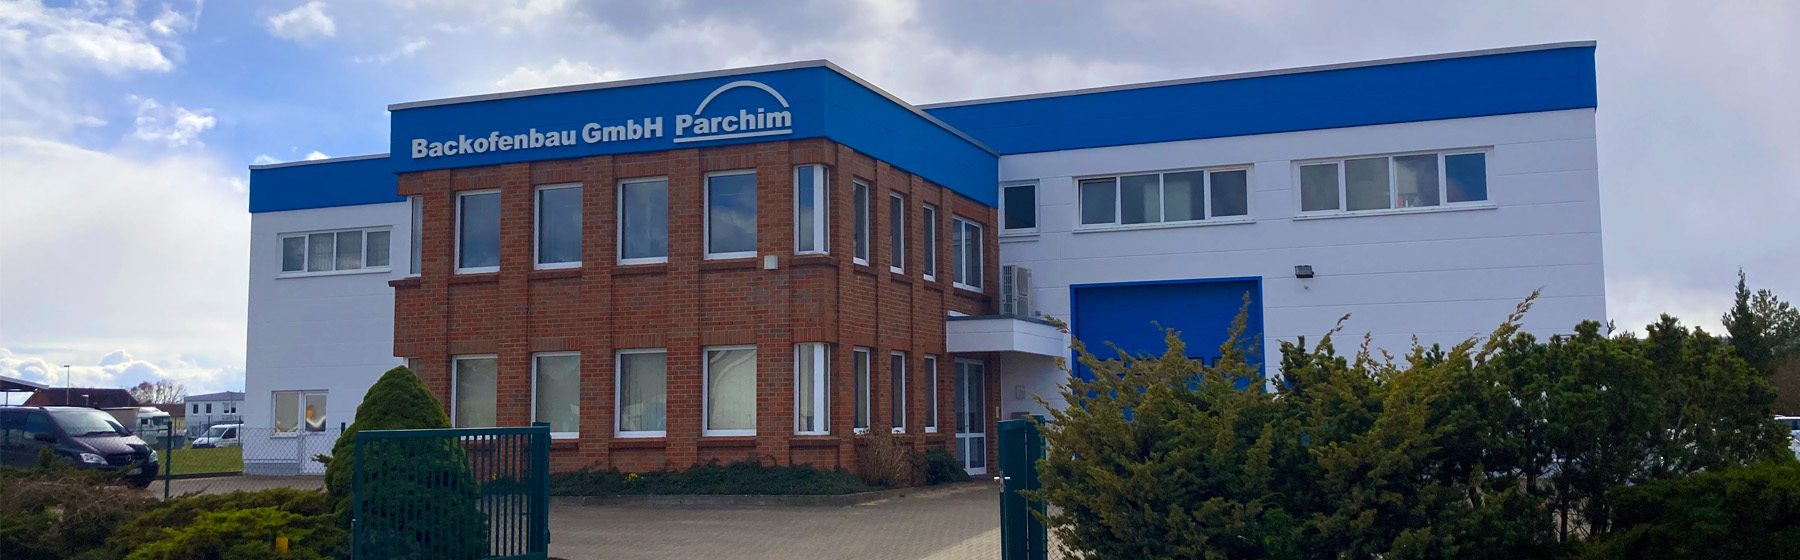 Backofenbau GmbH Parchim